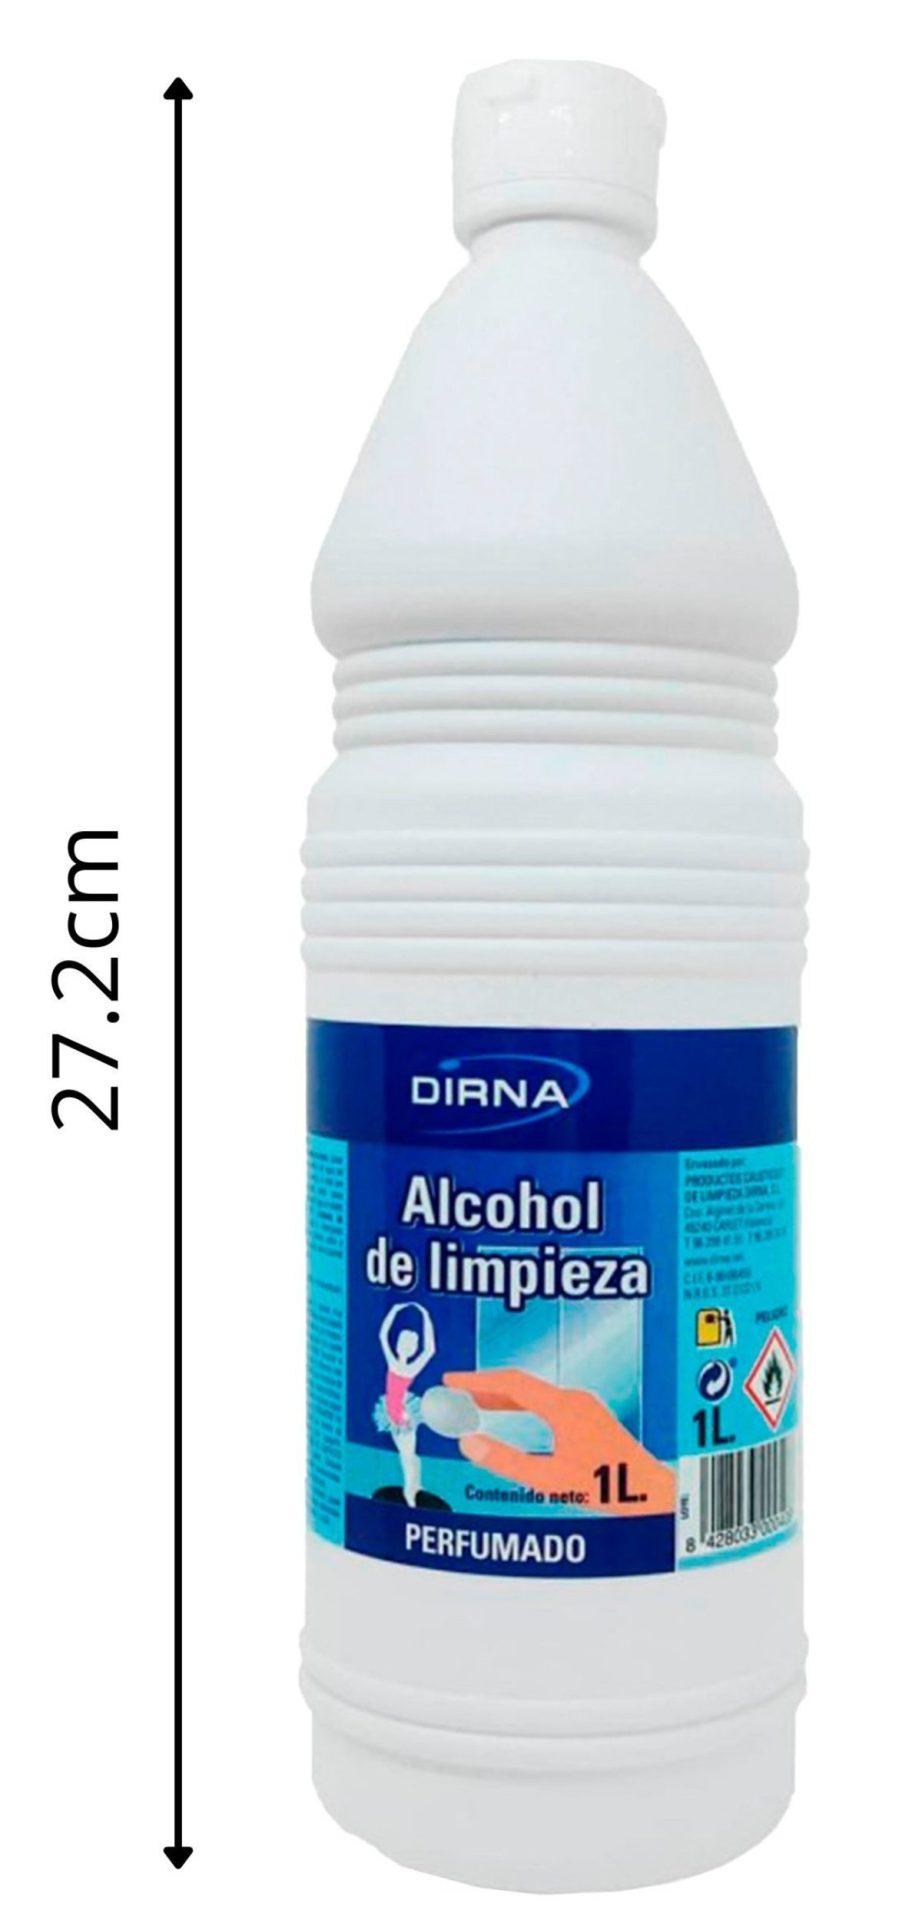 Alcohol de limpieza con olor a limón 1 litro. Caja de 12 botellas